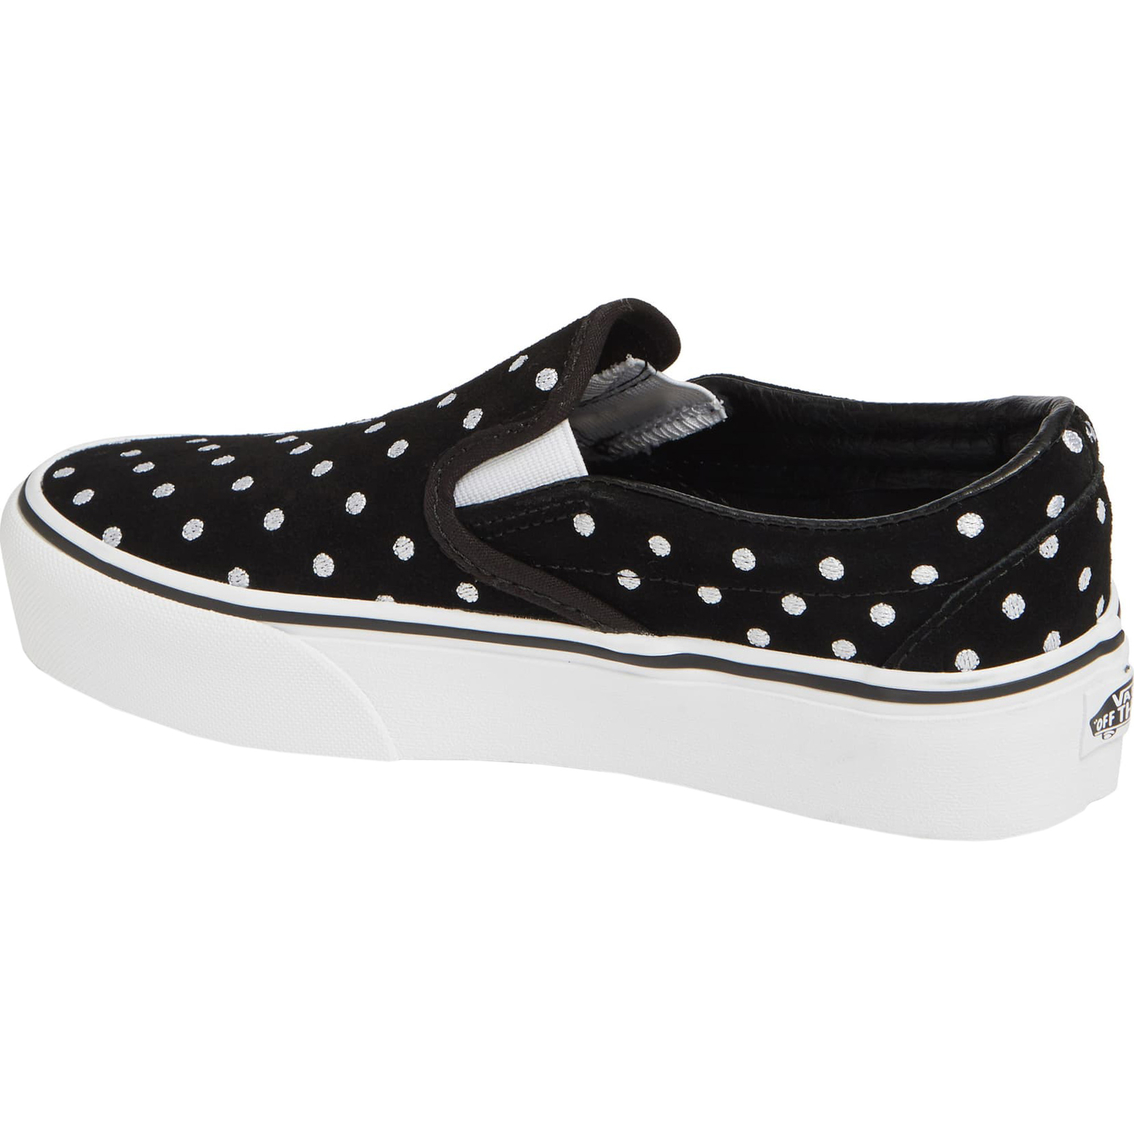 Vans Women's Slip On Platform Shoes Polka Dot Black | Sneakers | Shoes |  Shop The Exchange